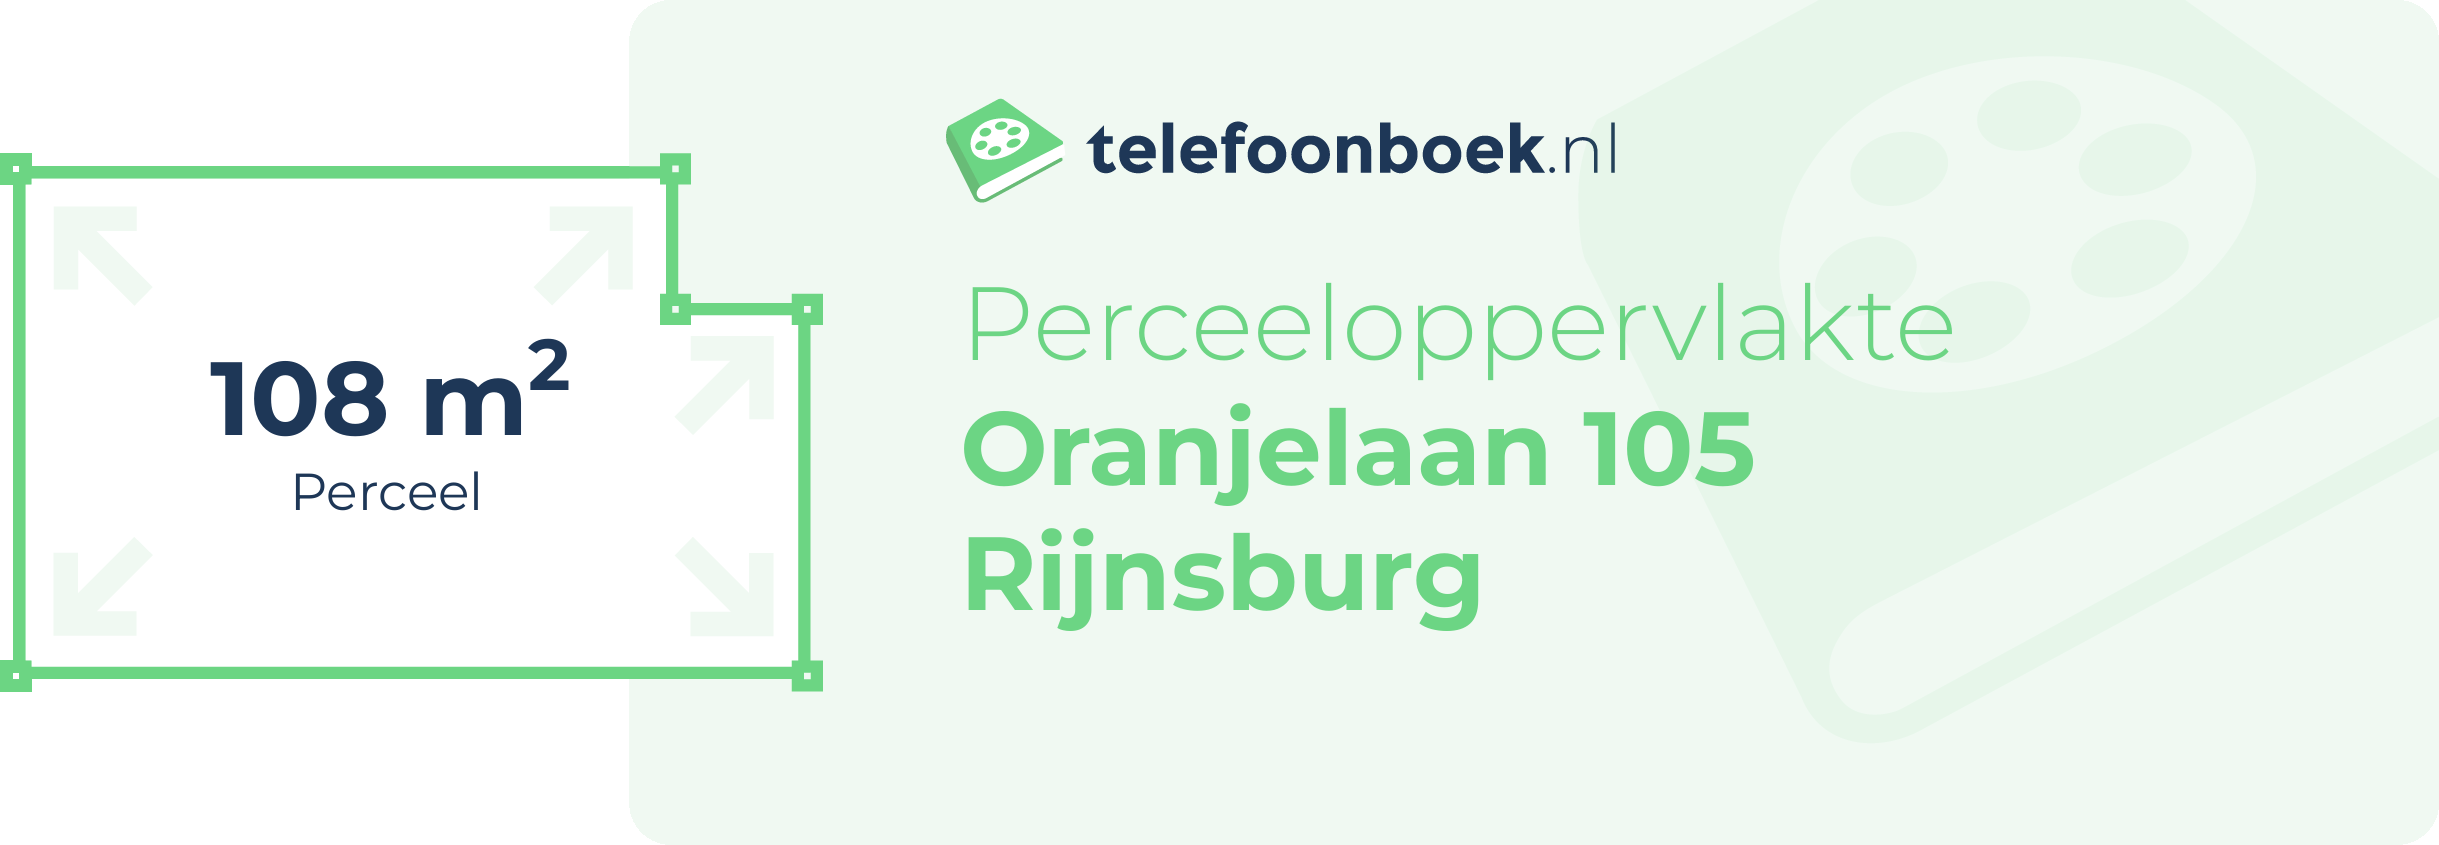 Perceeloppervlakte Oranjelaan 105 Rijnsburg